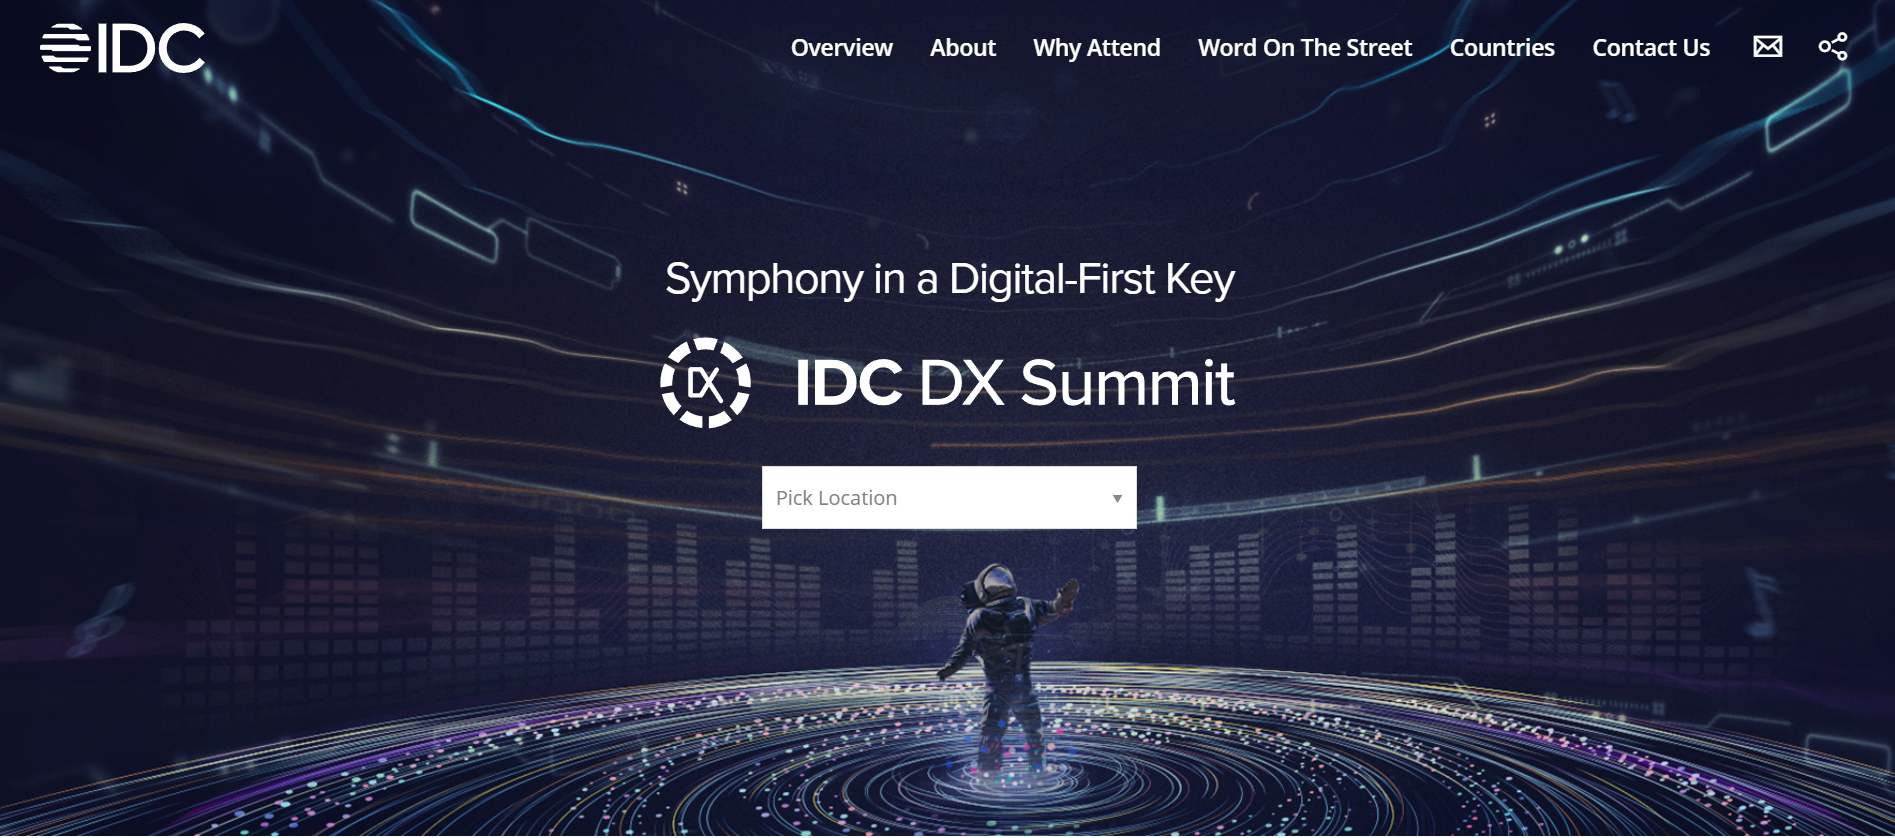 IDC SUMMIT List of Digital Transformation Conferences